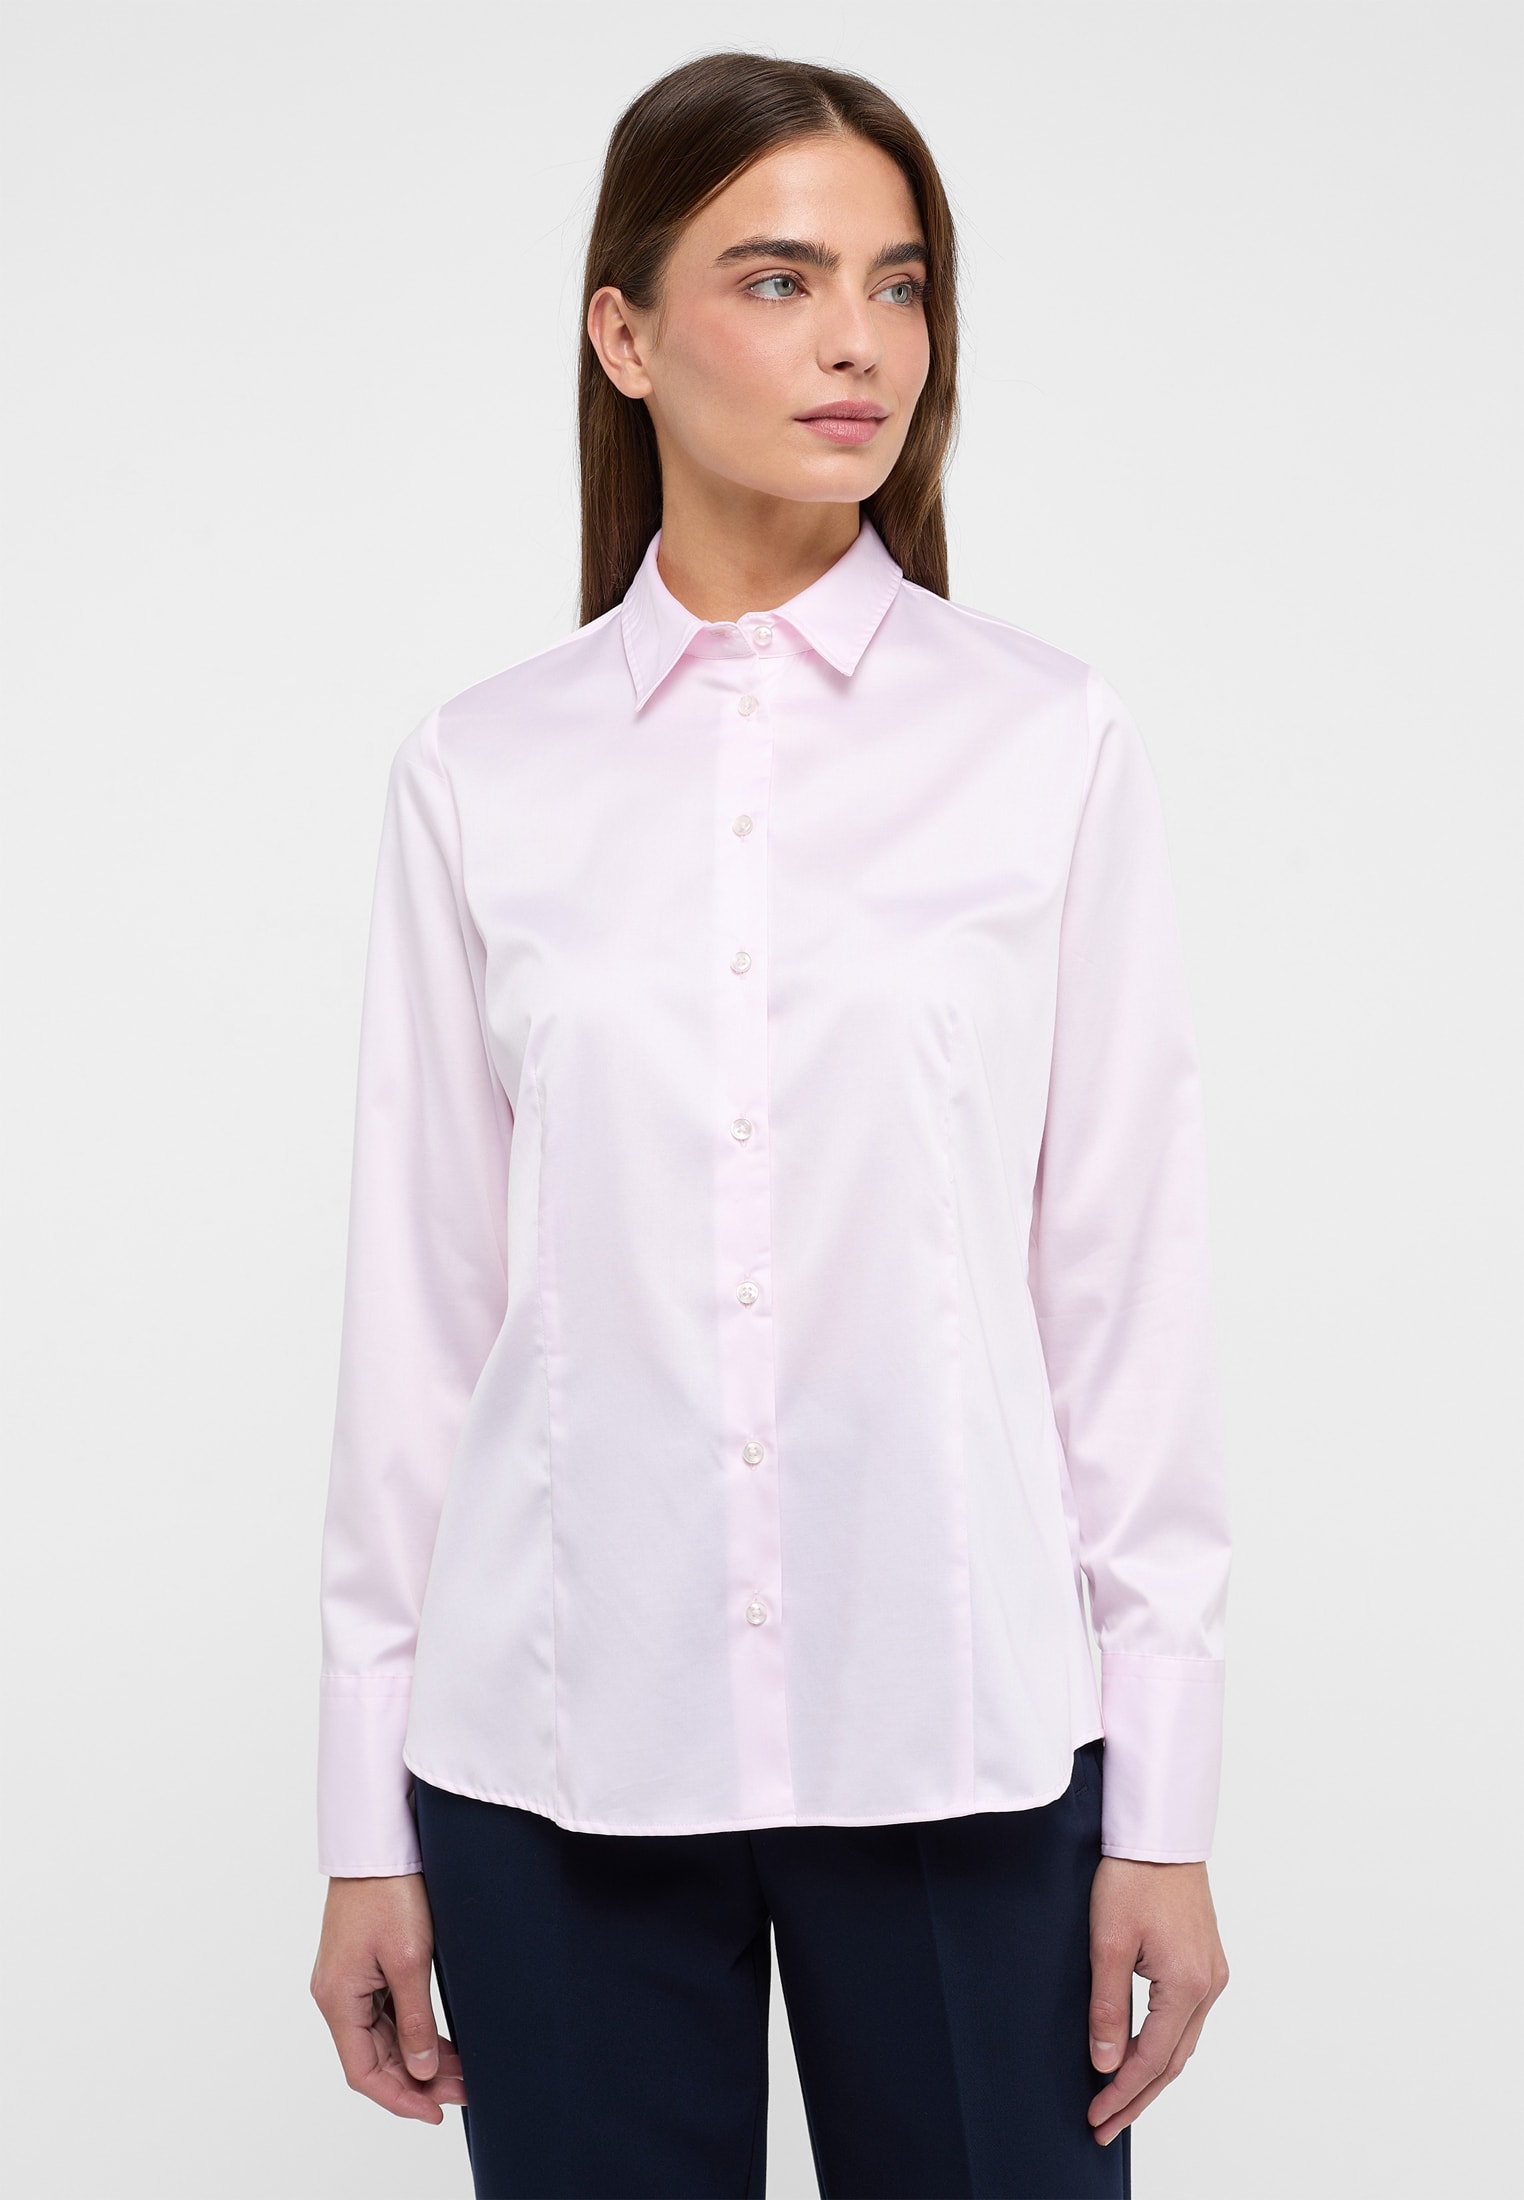 Satin Shirt Bluse rosa unifarben | 2BL00399-15-11-44-1/1 Langarm | | | rosa in 44